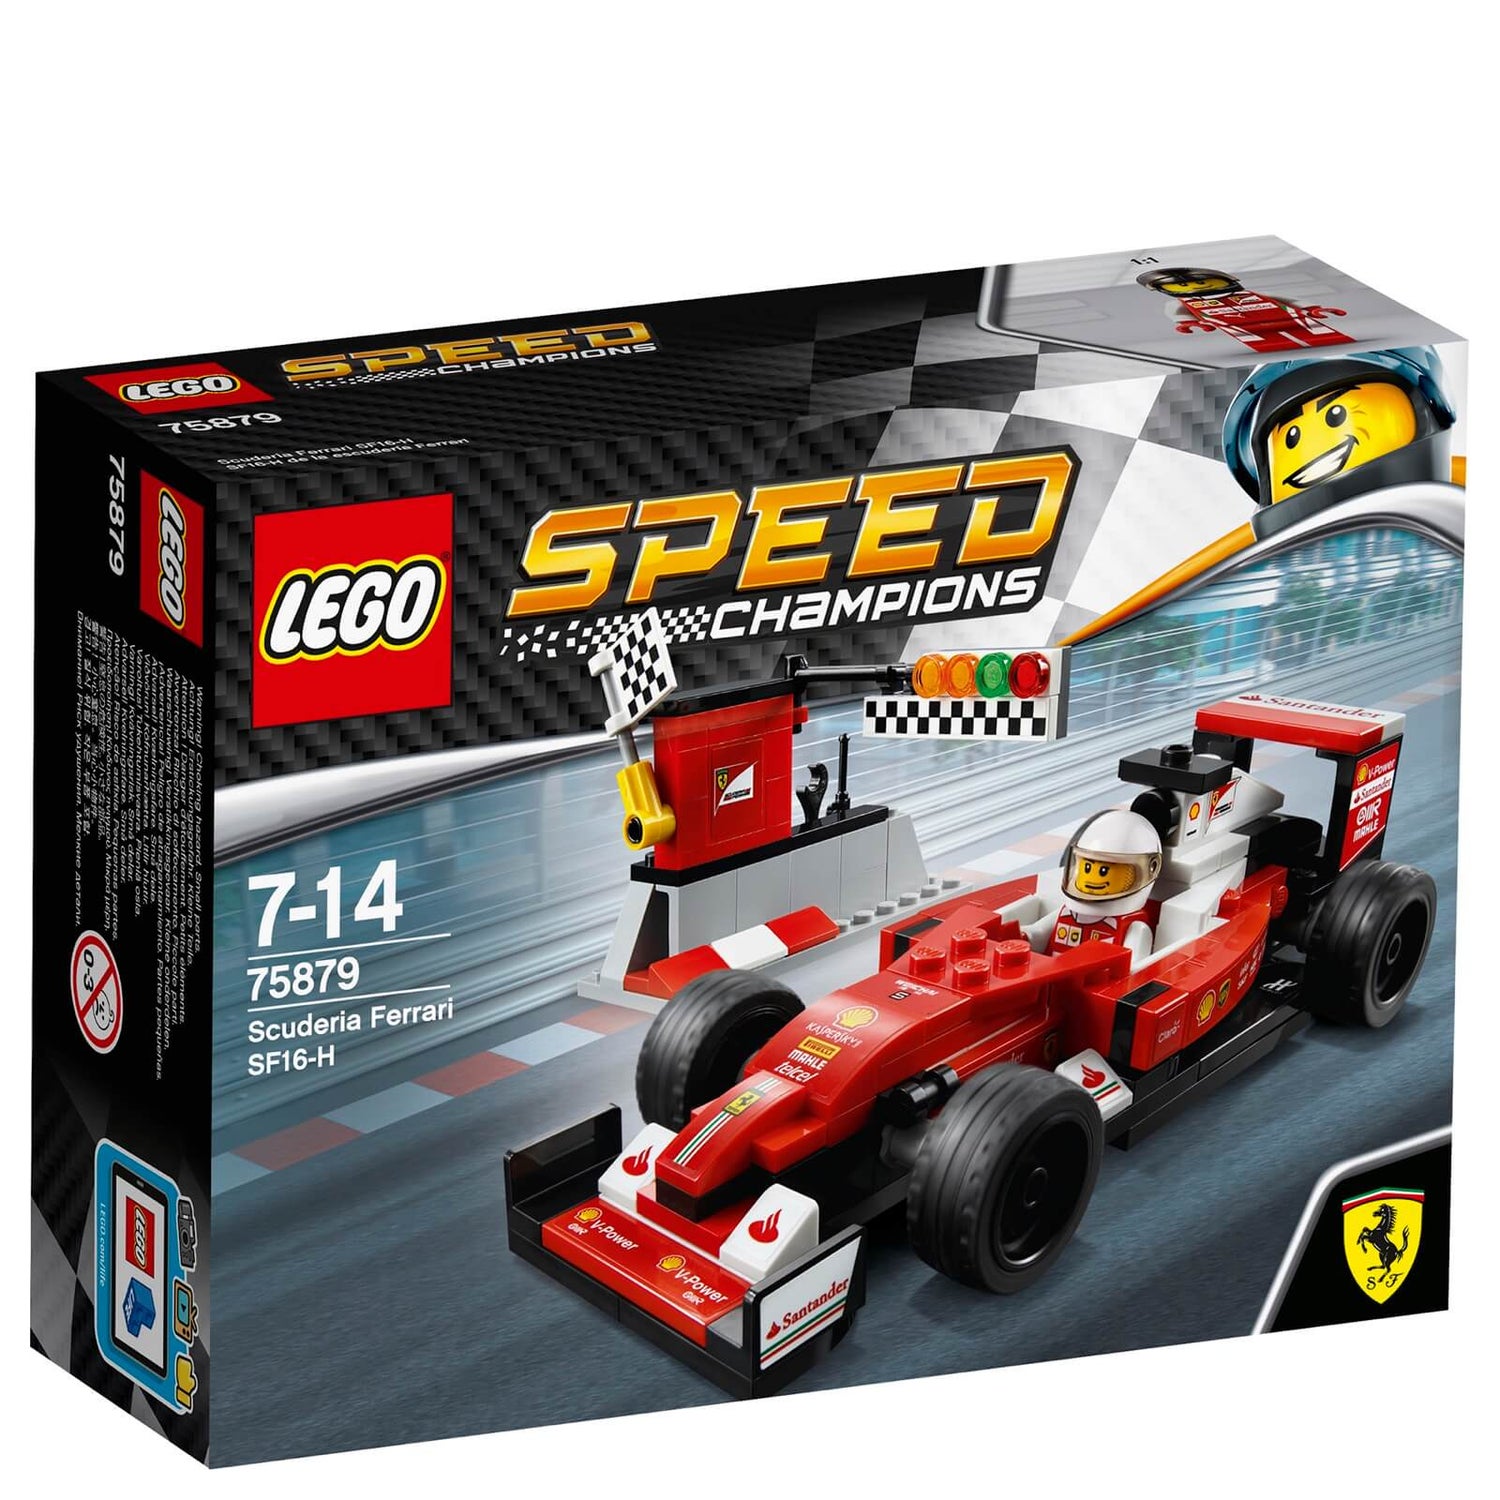 LEGO Speed Champions: Ferrari F8 Tributo Car Set (76895) Toys - Zavvi US